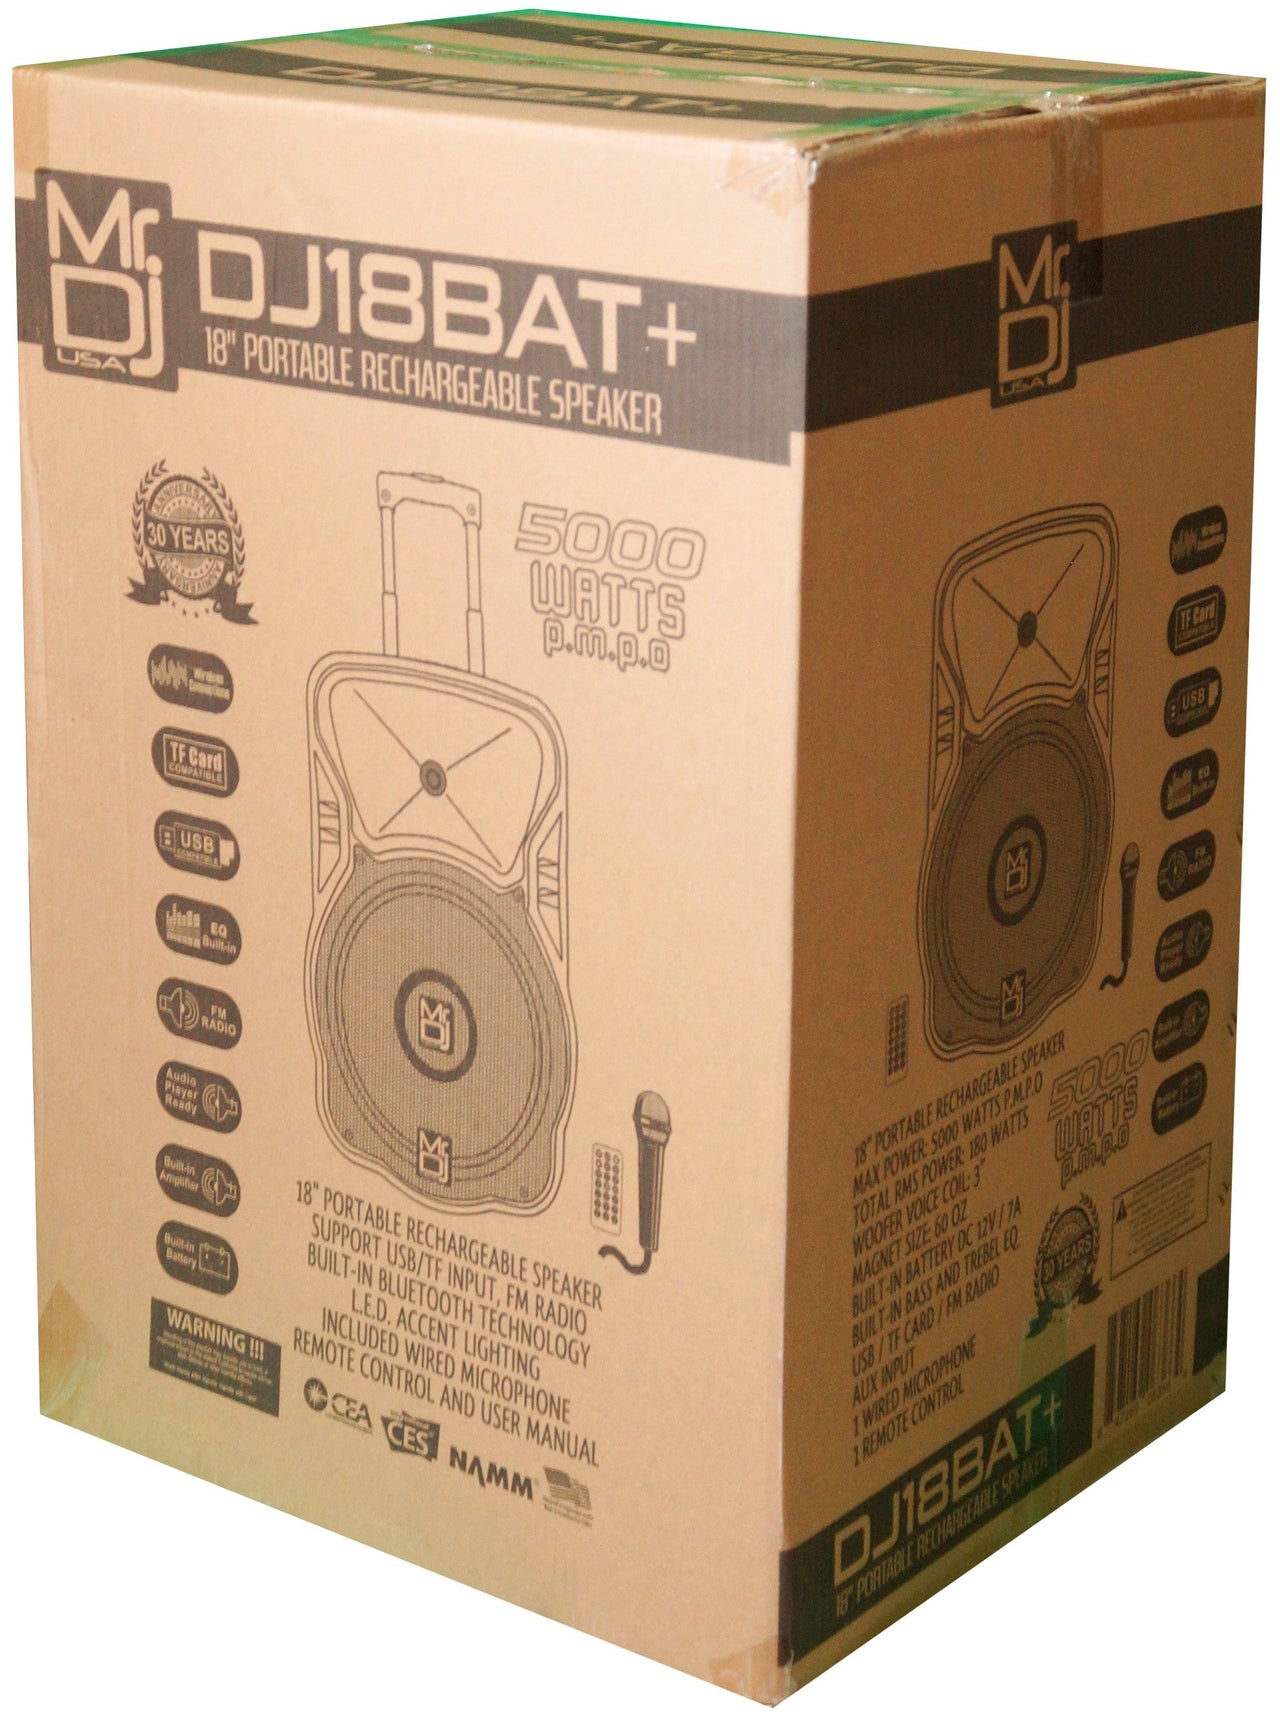 MR DJ DJ18BAT+ 18" Portable Bluetooth Speaker + Speaker Stand + LED Crystal Magic Ball